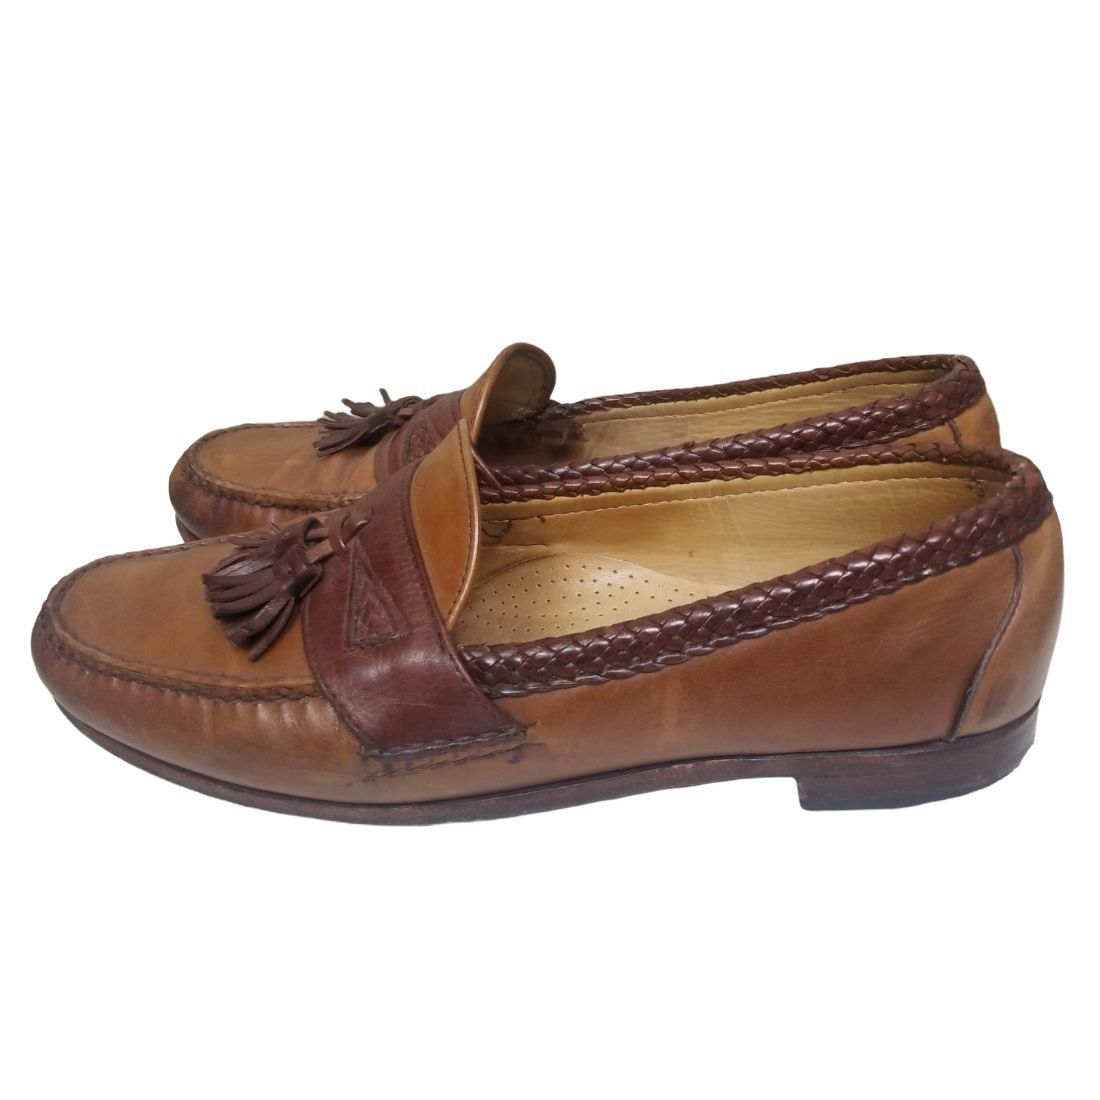 Allen Edmonds Allen Edmonds Leather Closed Toe Slip On Maxfield Loafers Size US 12 / EU 45 - 5 Thumbnail